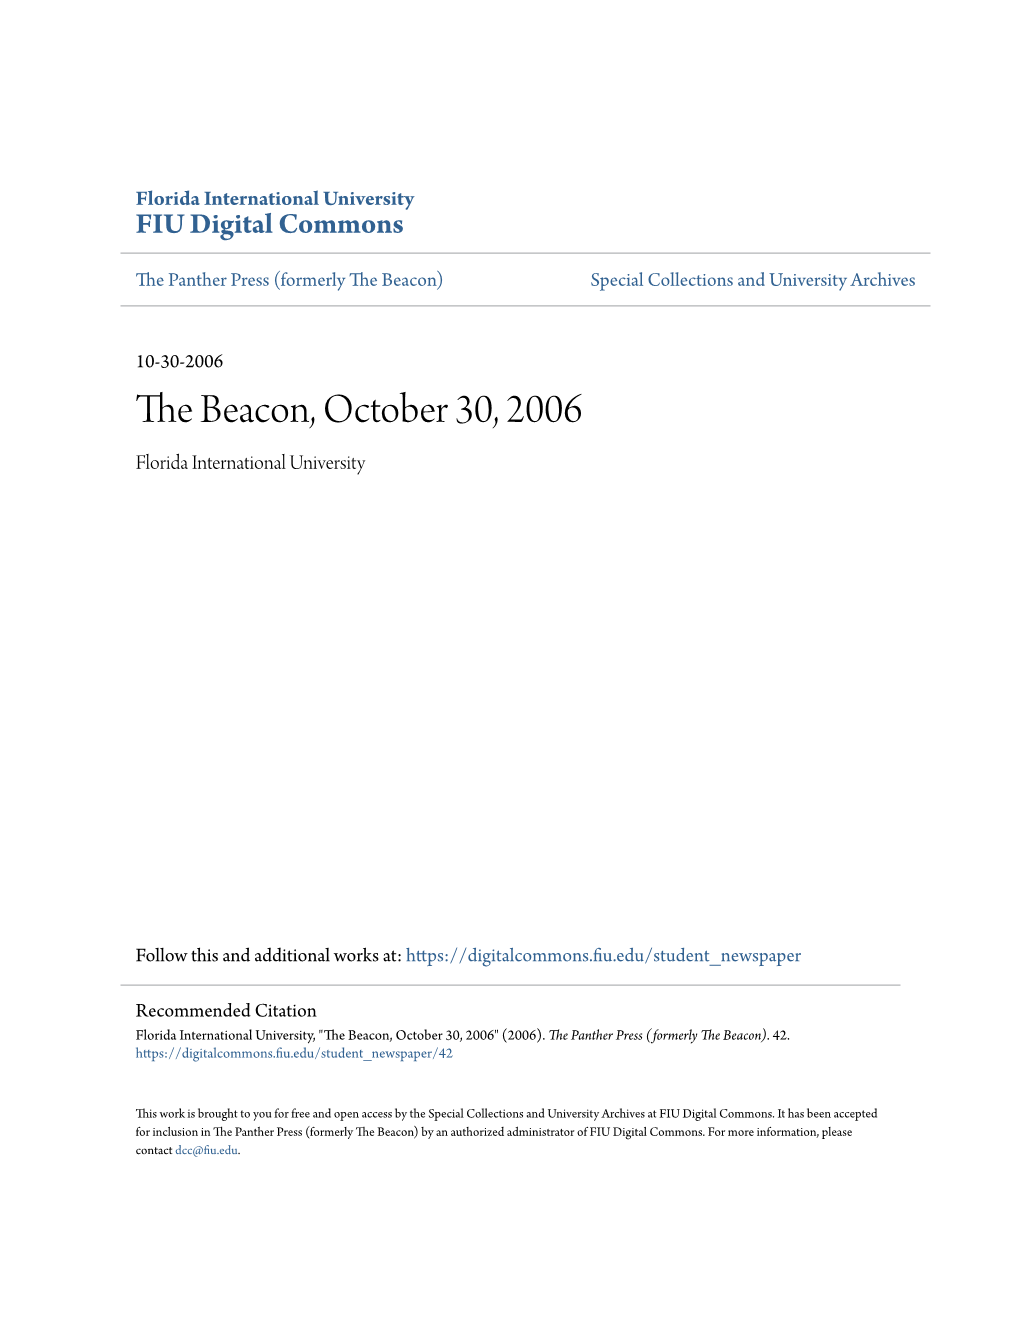 The Beacon, October 30, 2006 Florida International University